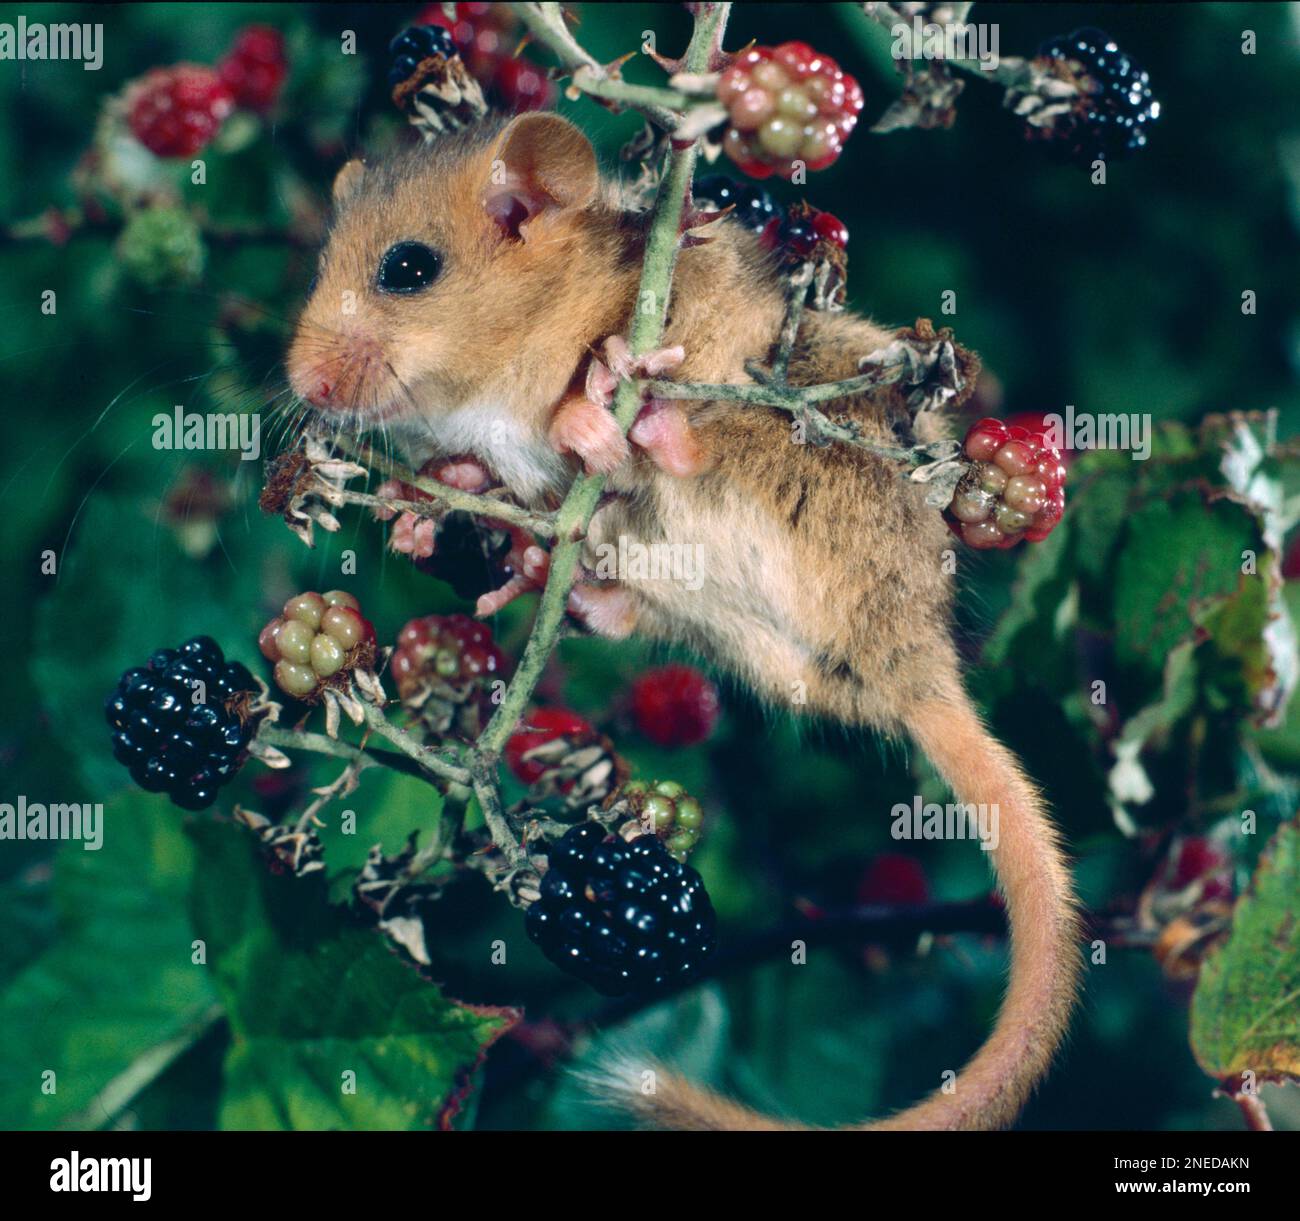 Dormouse, Muscardinus avellanarius, climbing in blackberries in blackberry bush Stock Photo